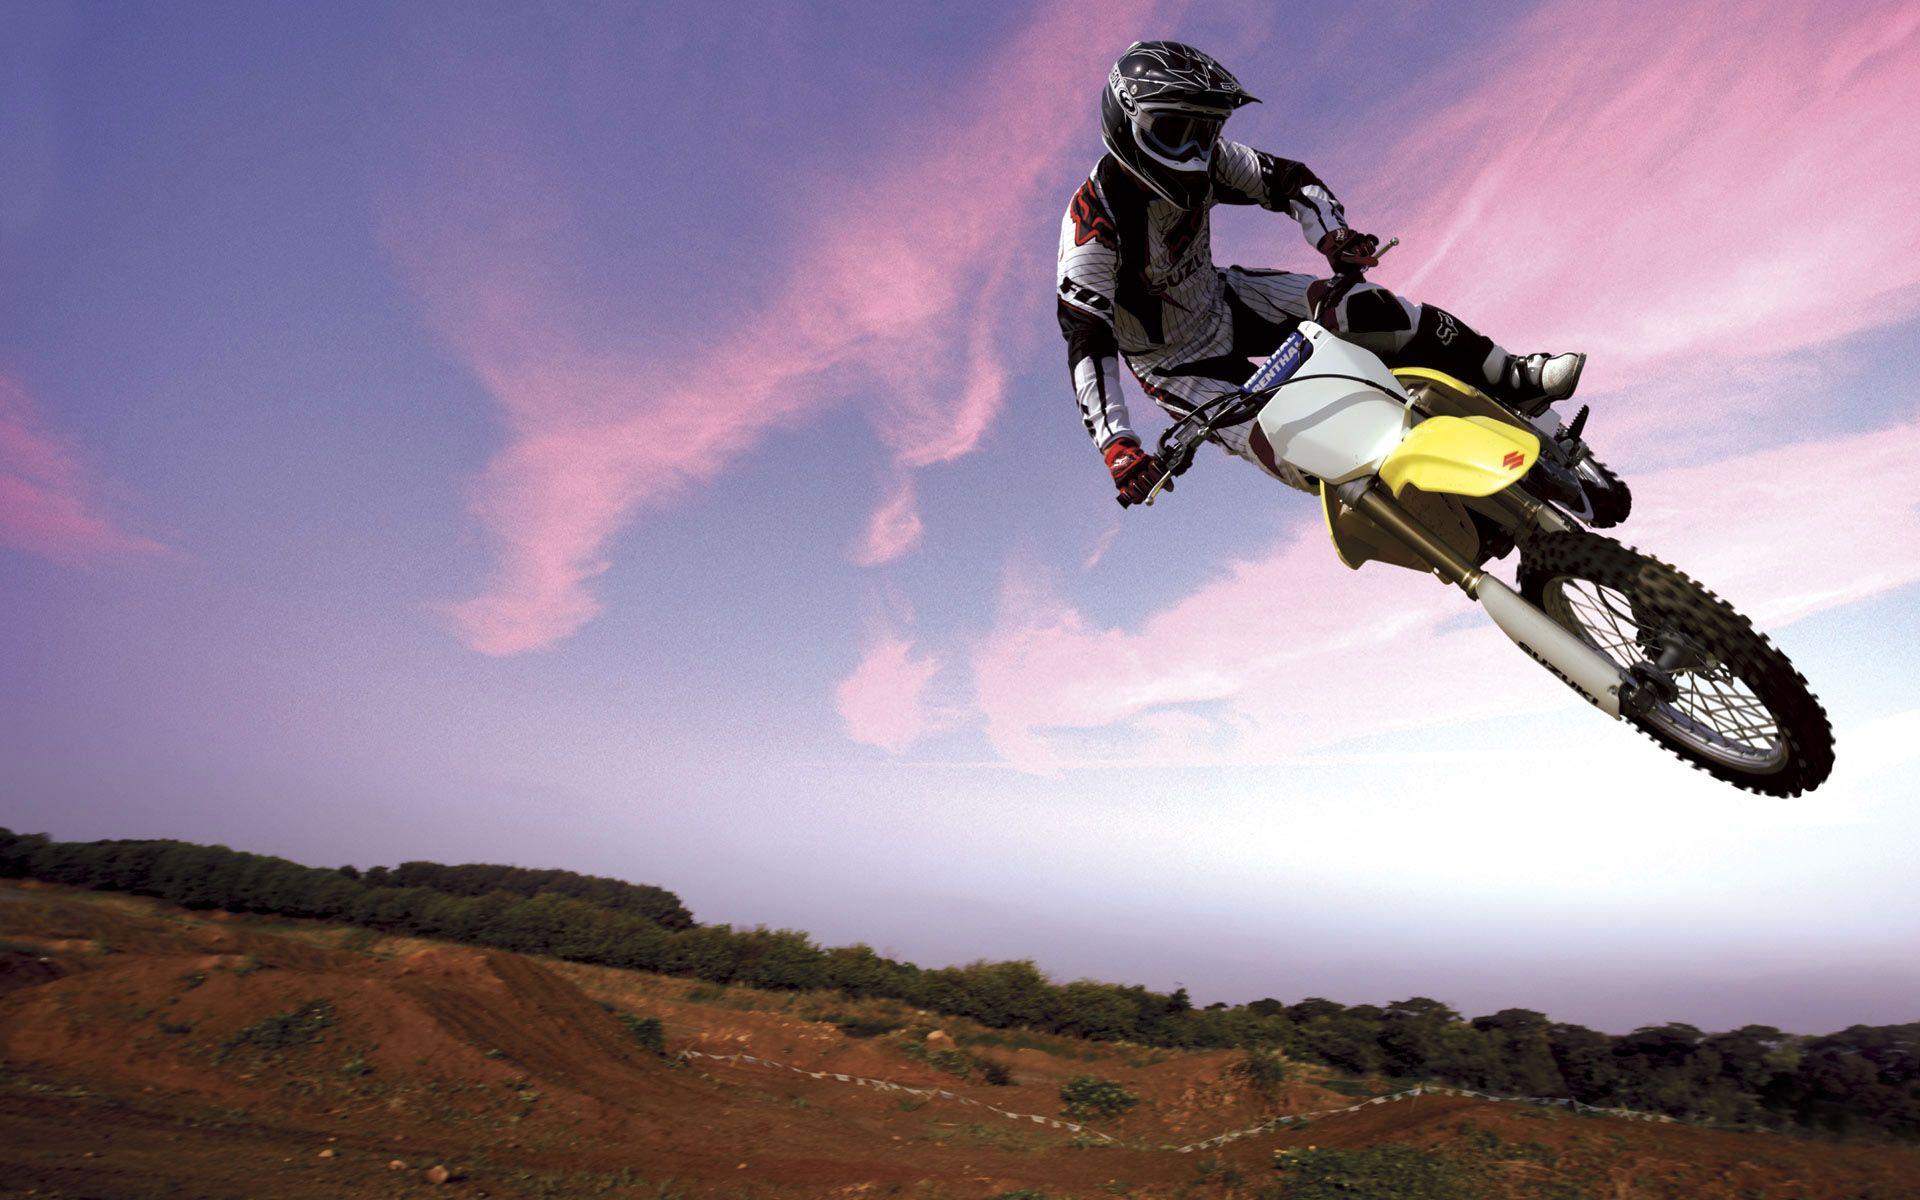 Motocross Bike in Sky Wallpaper